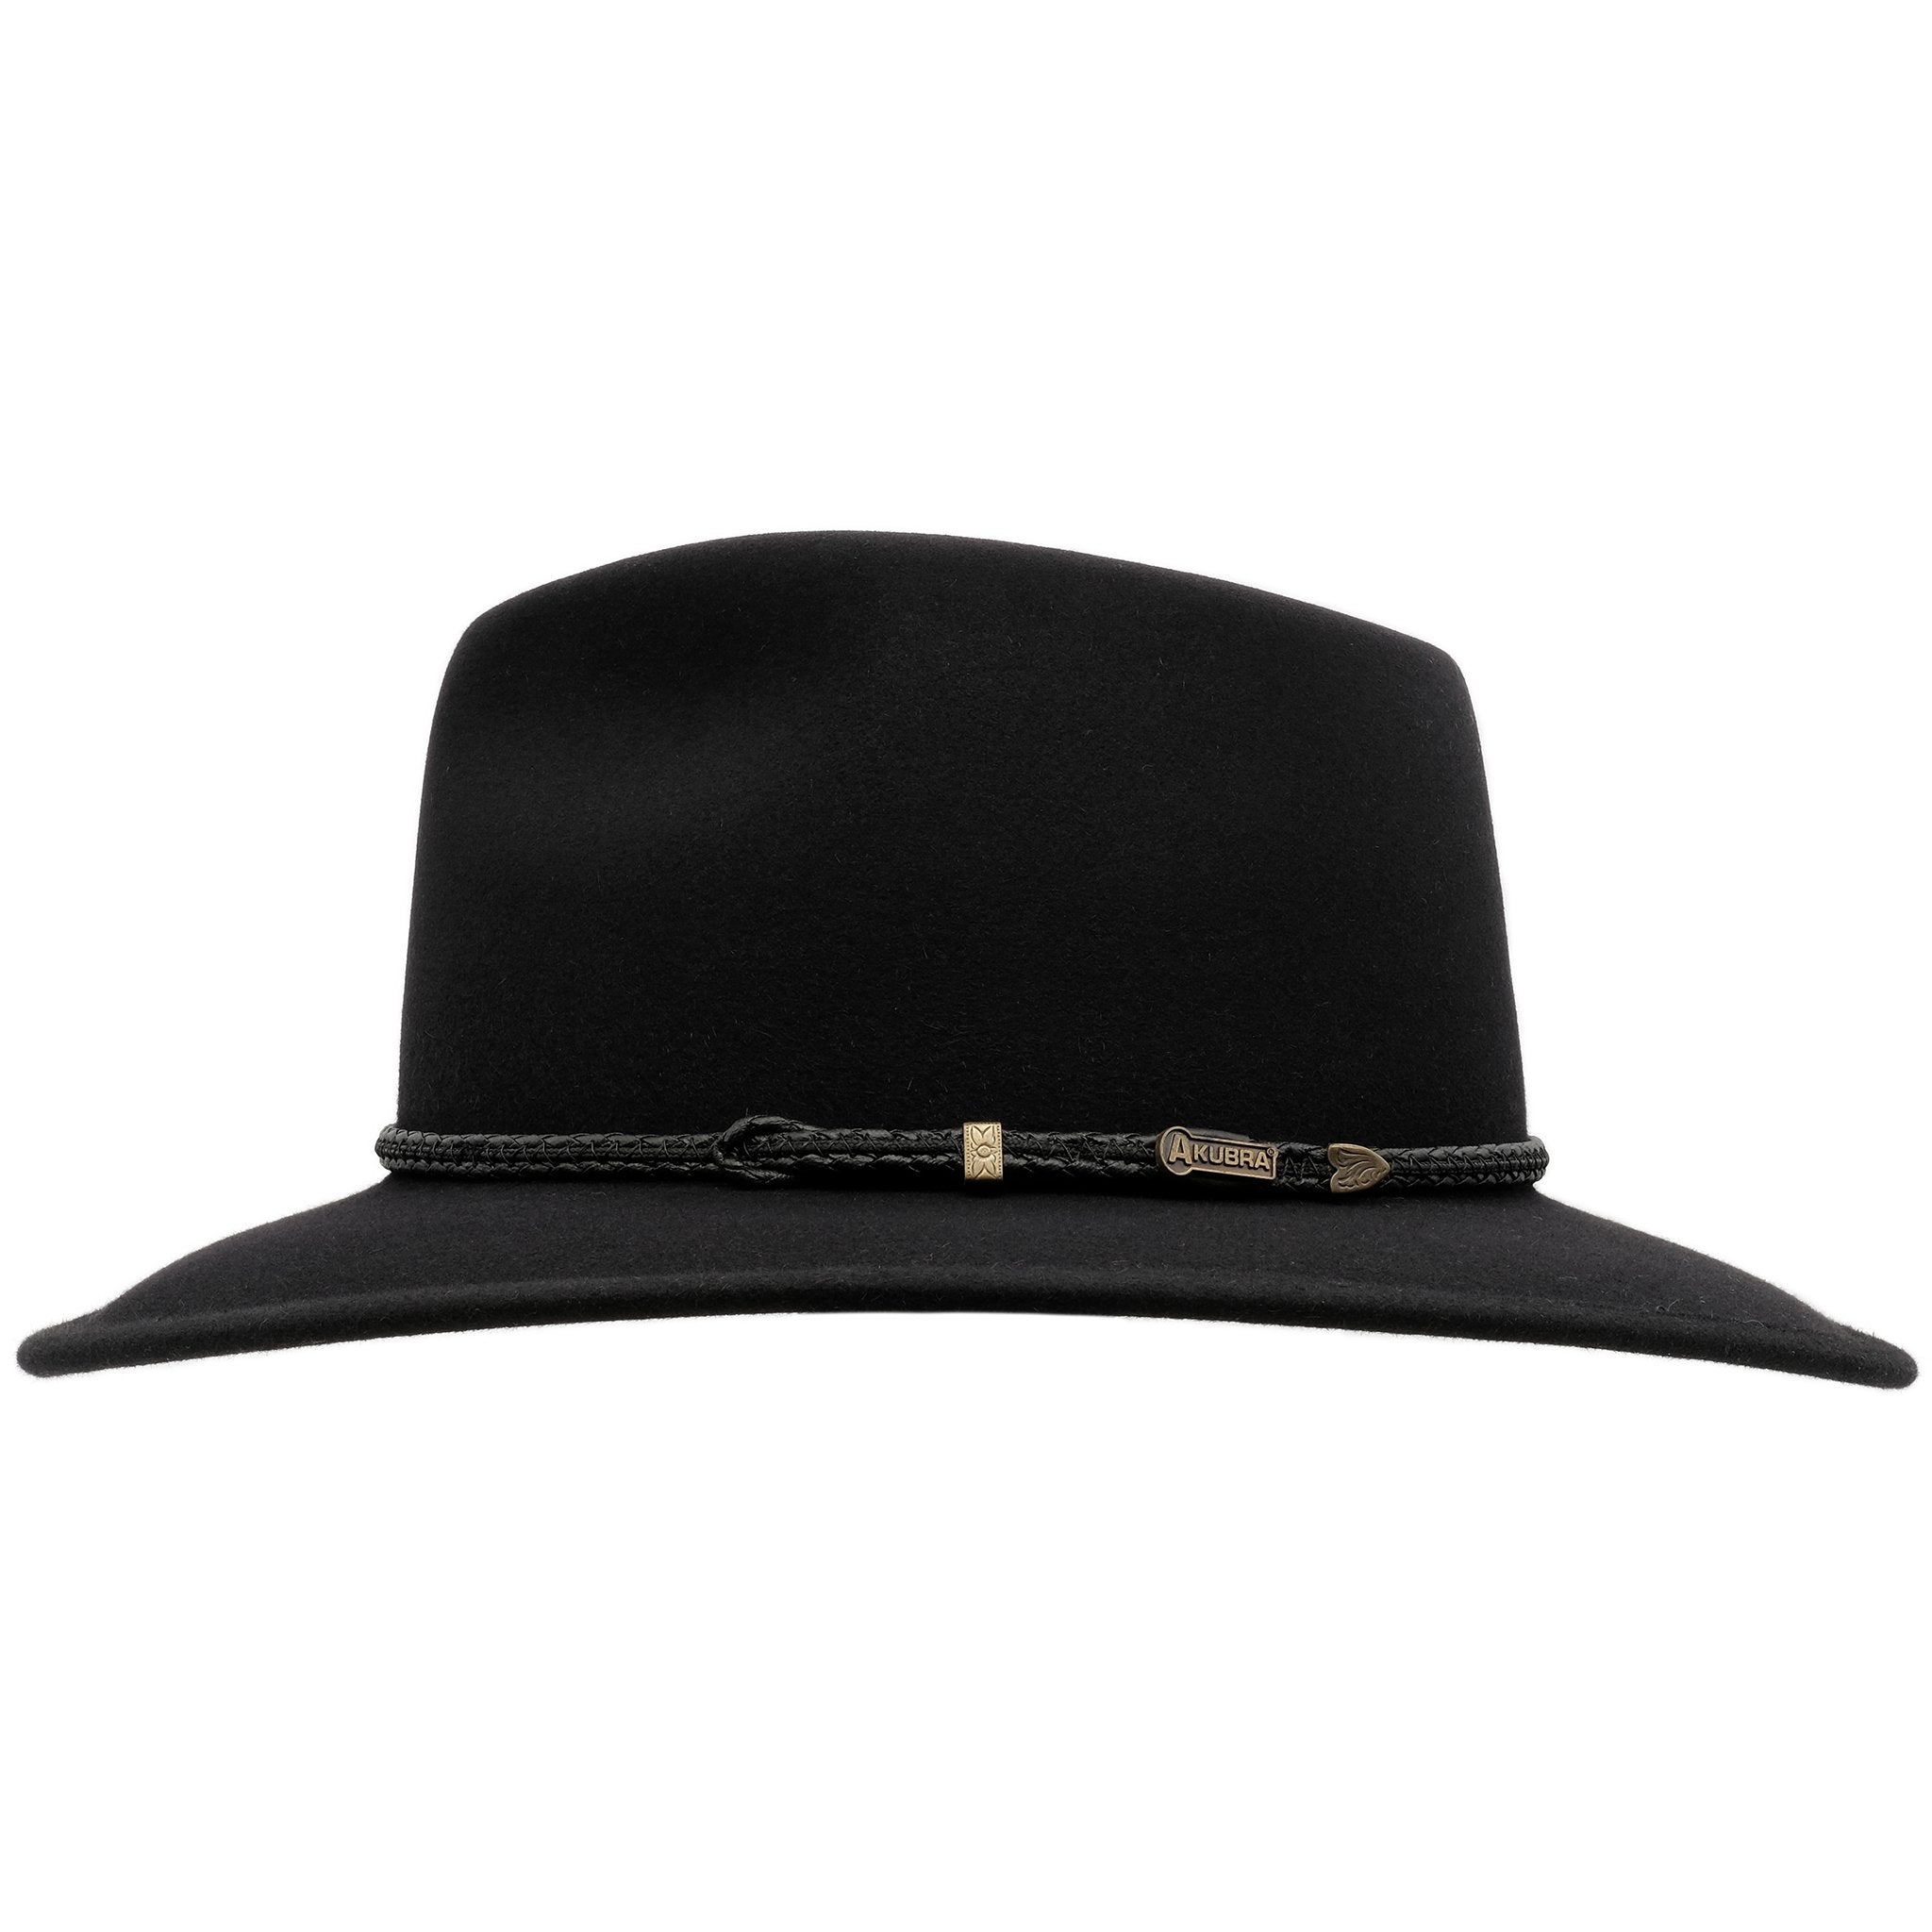 side view of the Akubra Traveller hat in black